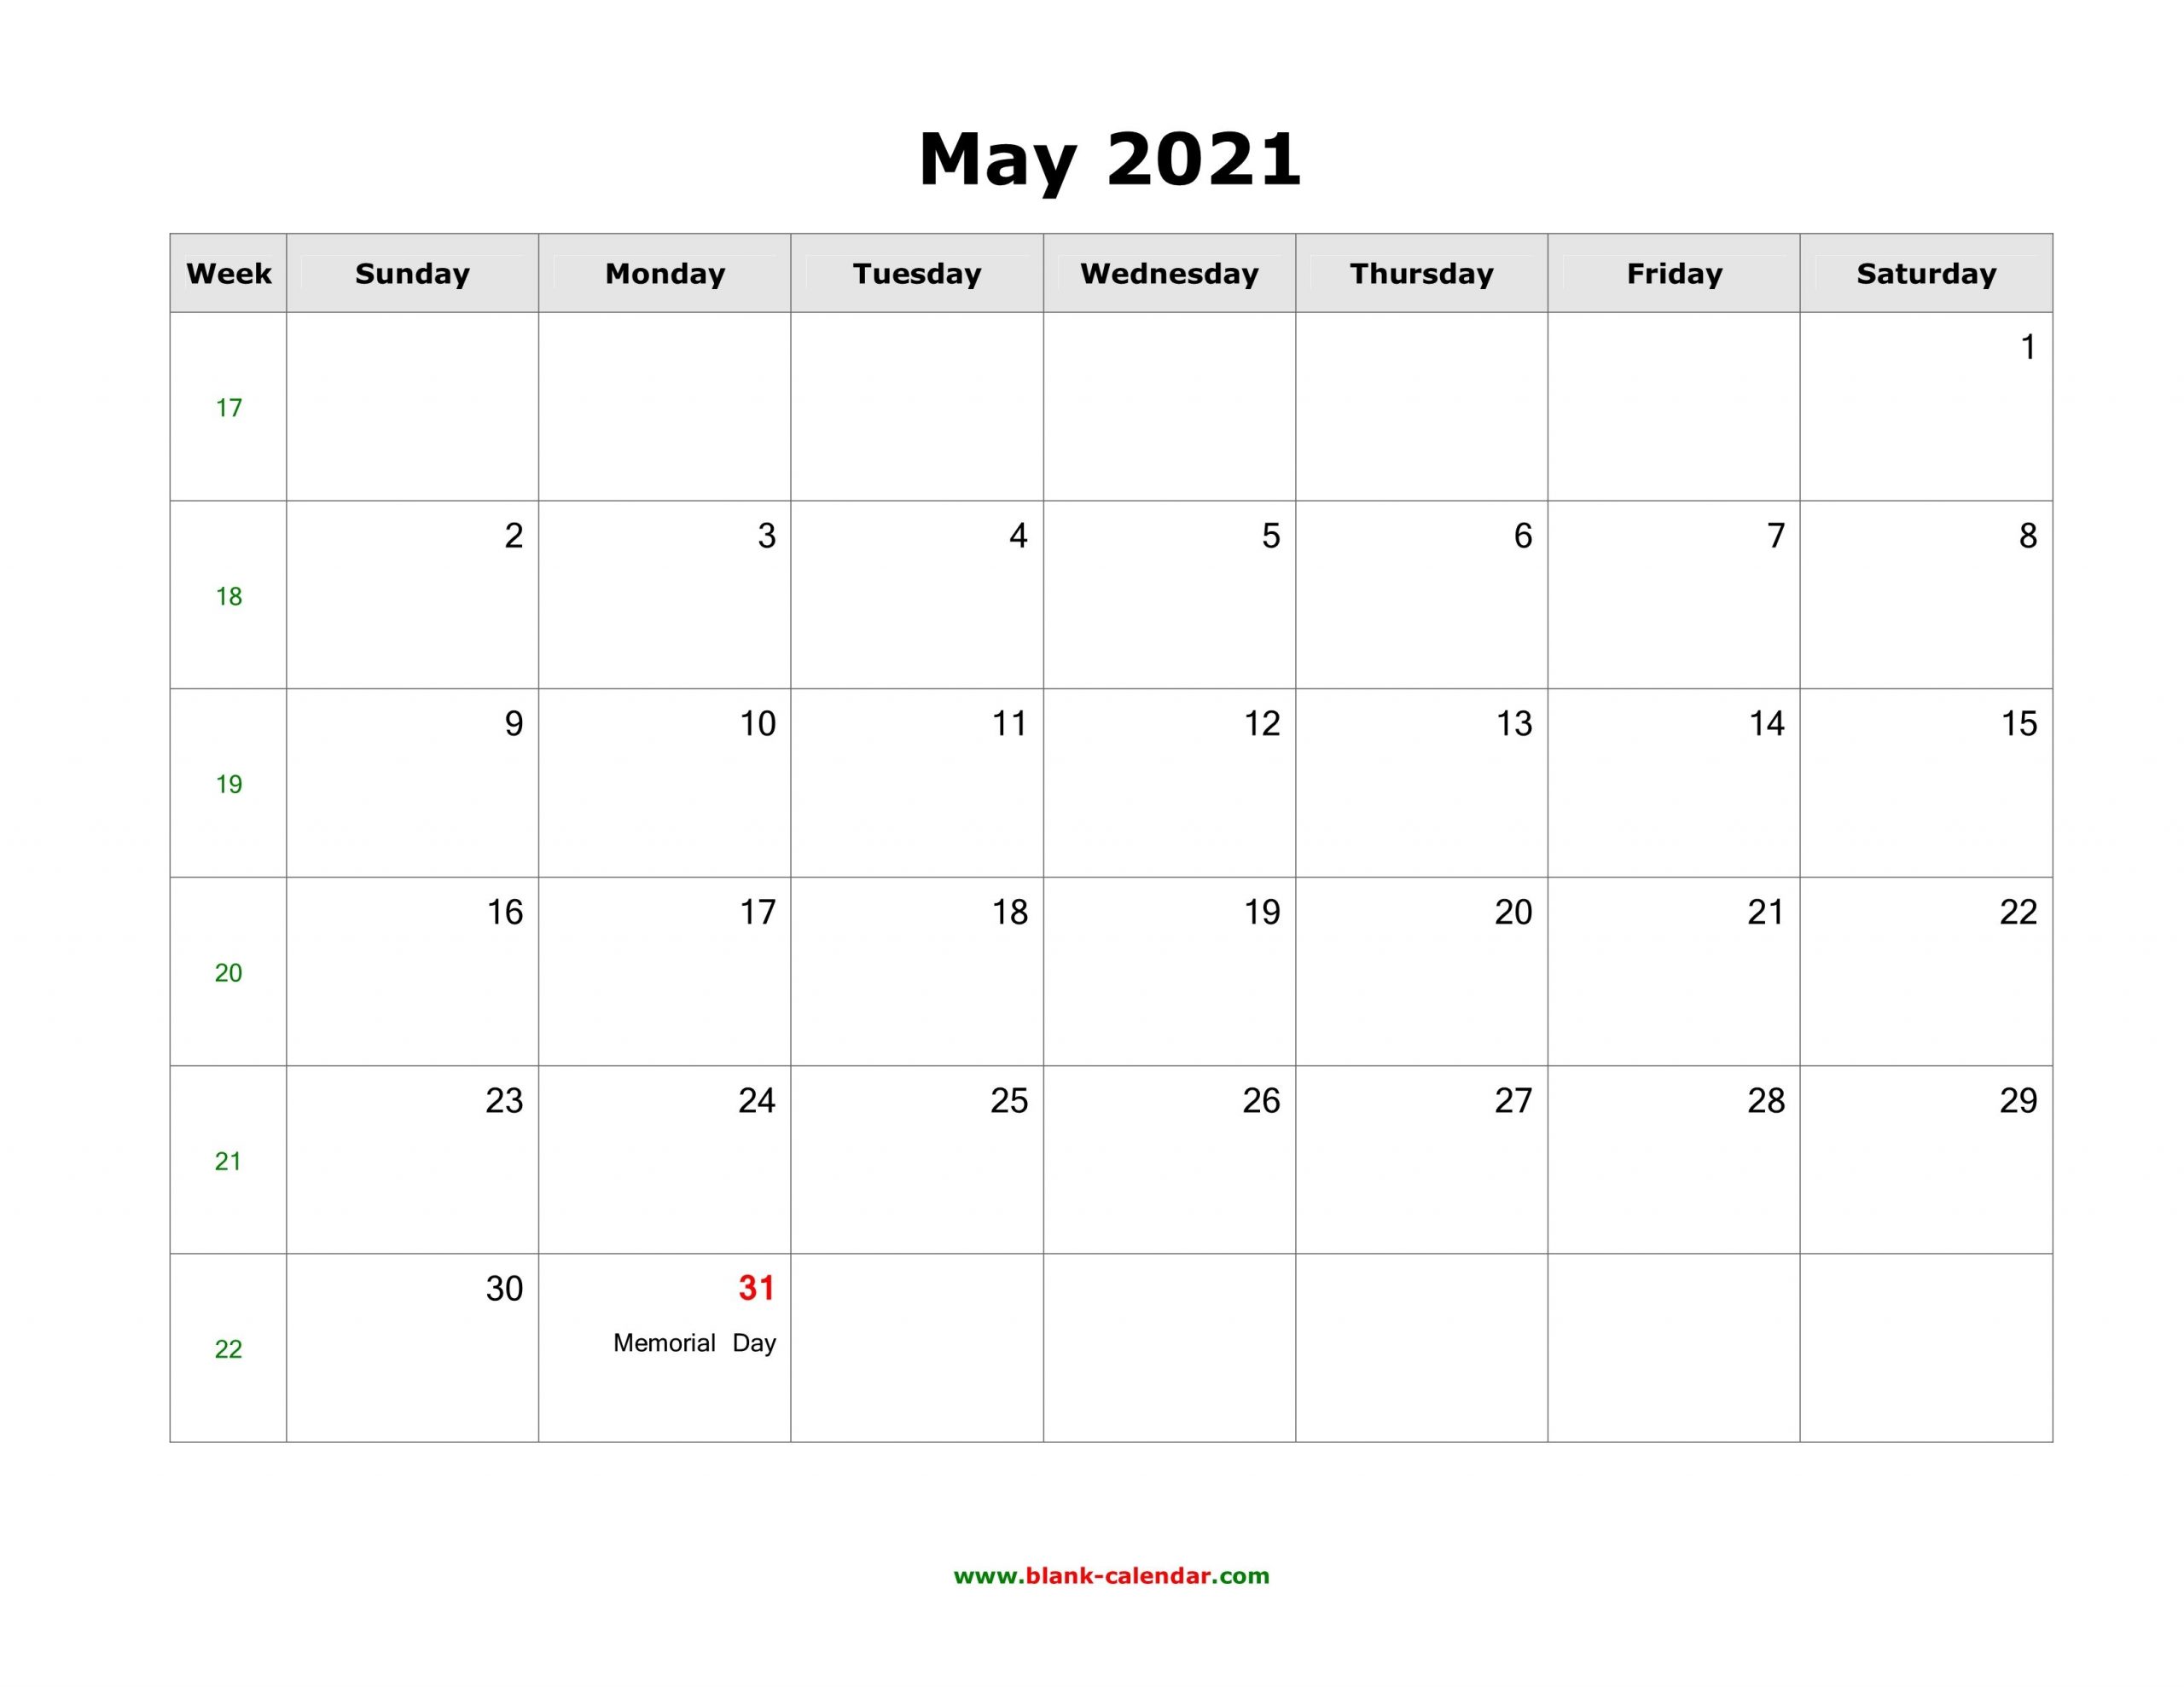 may 2021 blank calendar | free download calendar templates